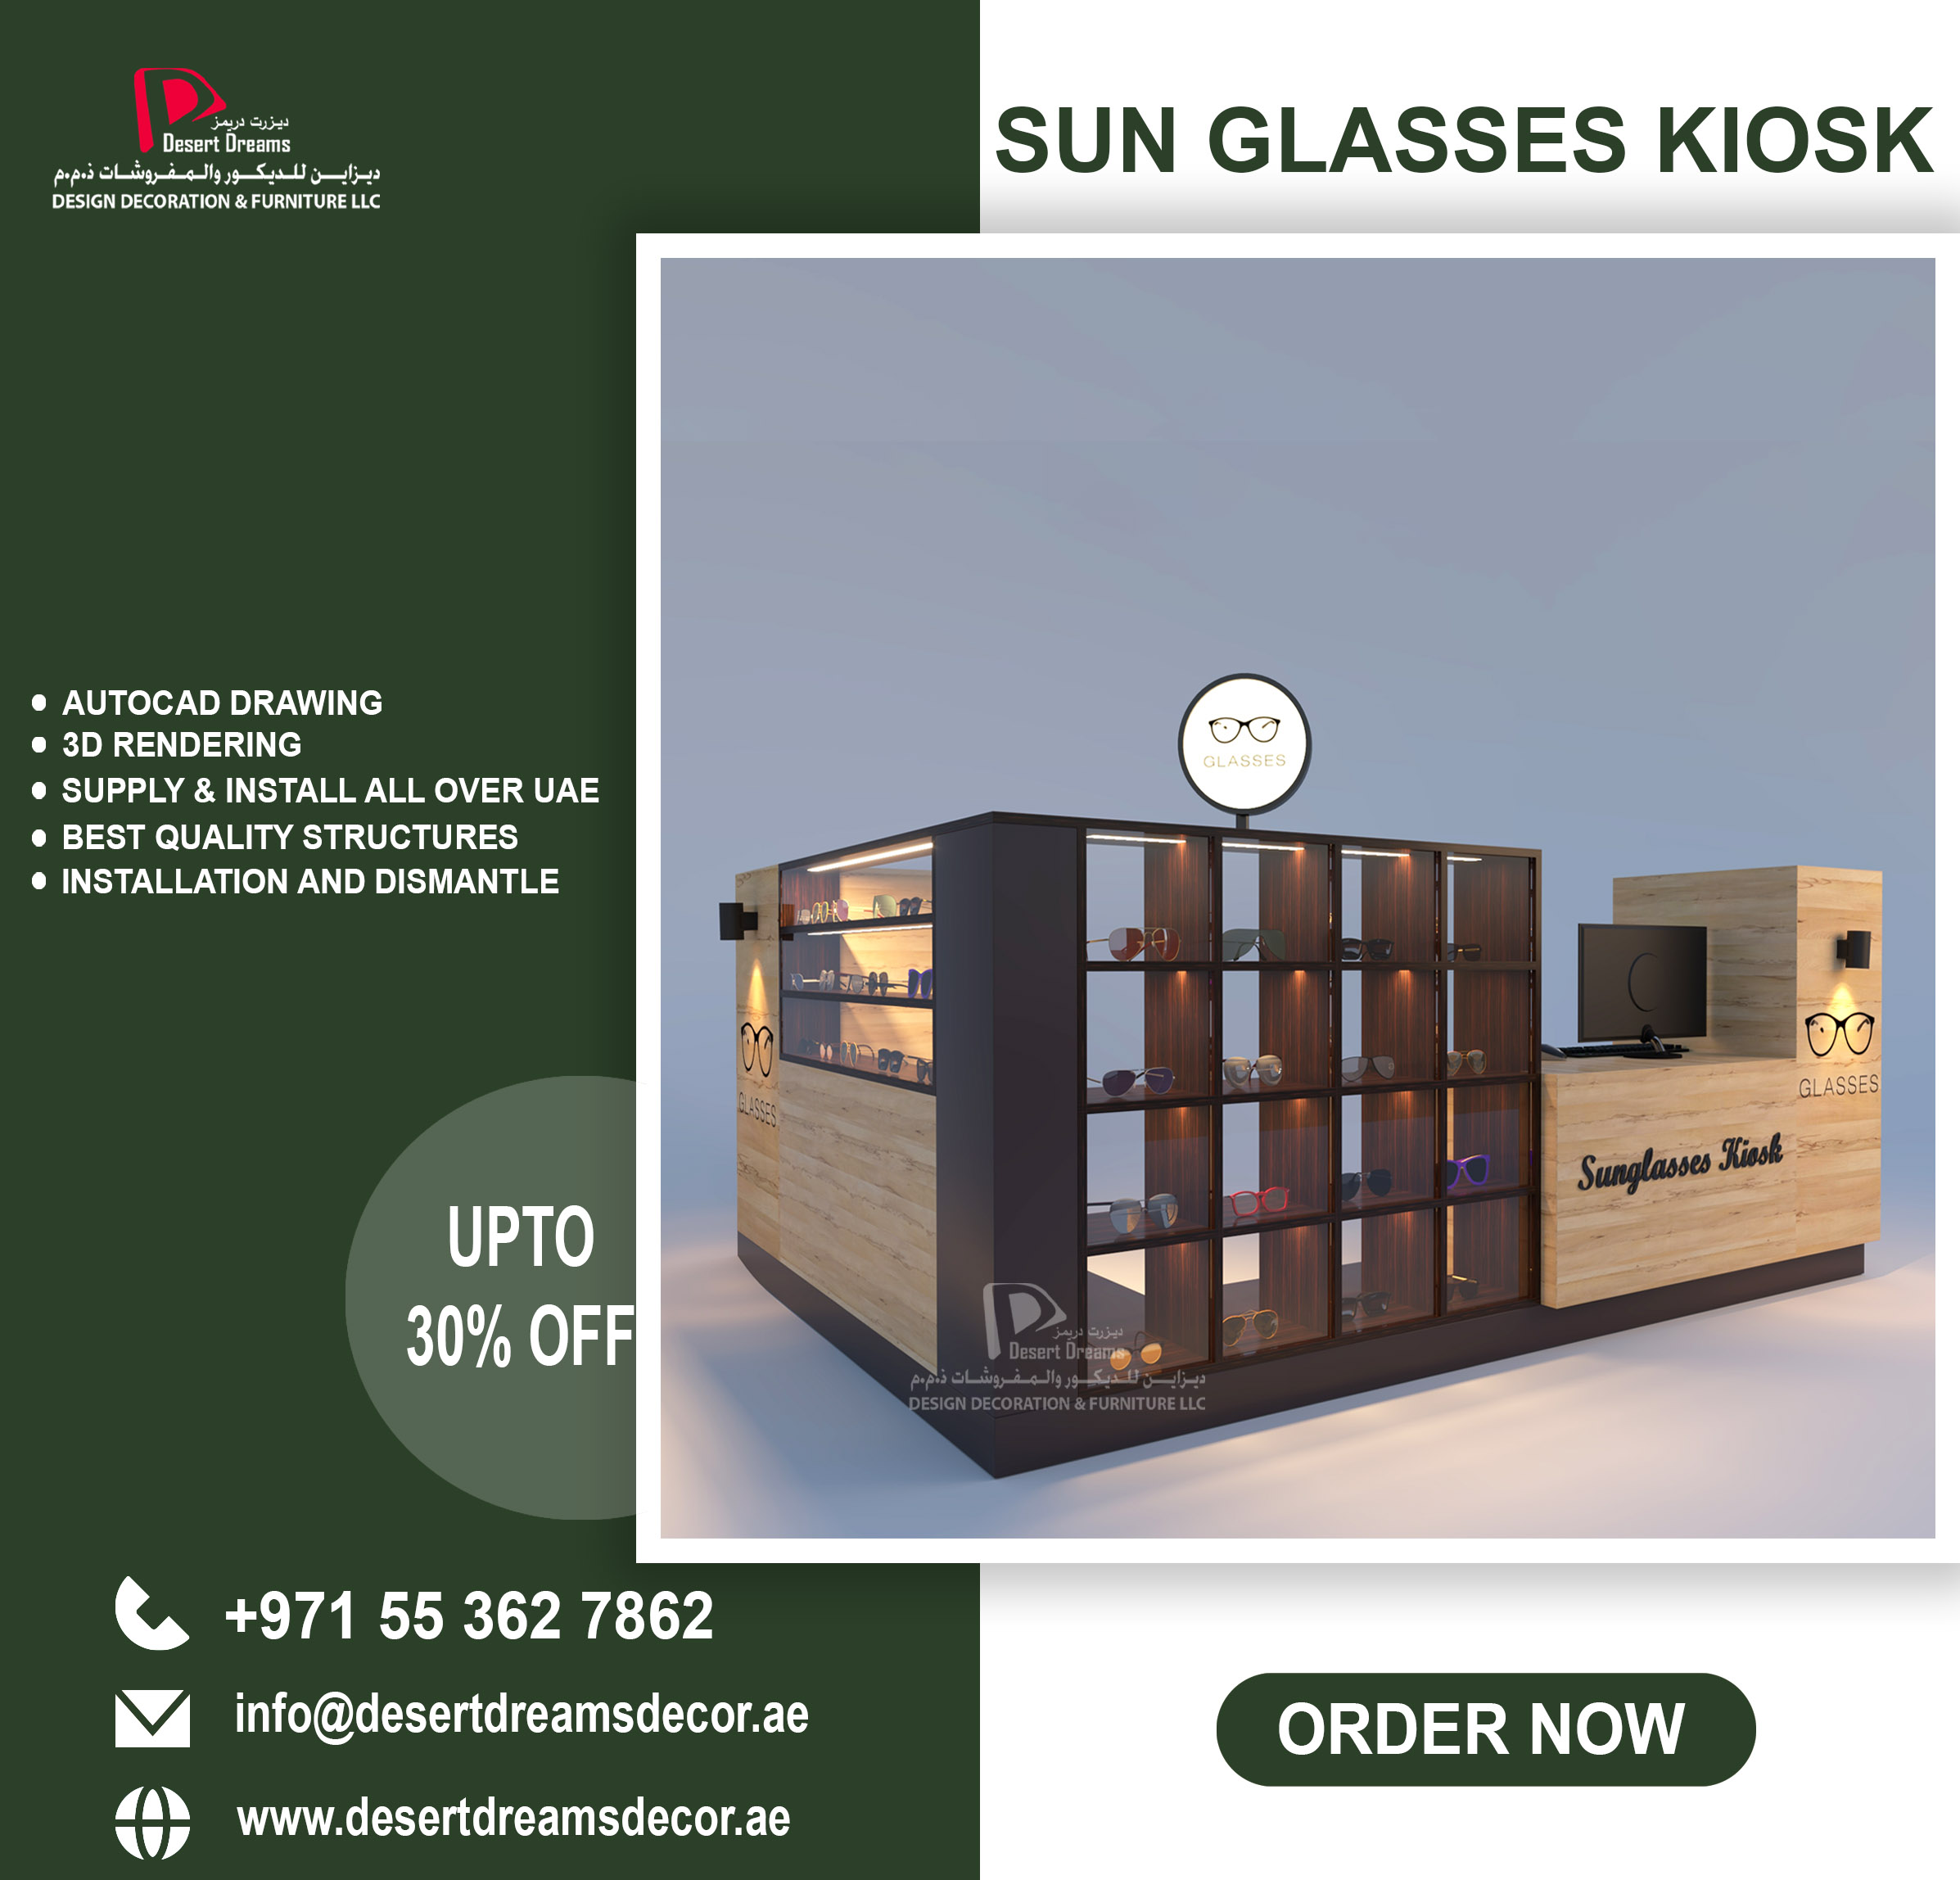 Sun Glasses Kiosk in Uae.jpg